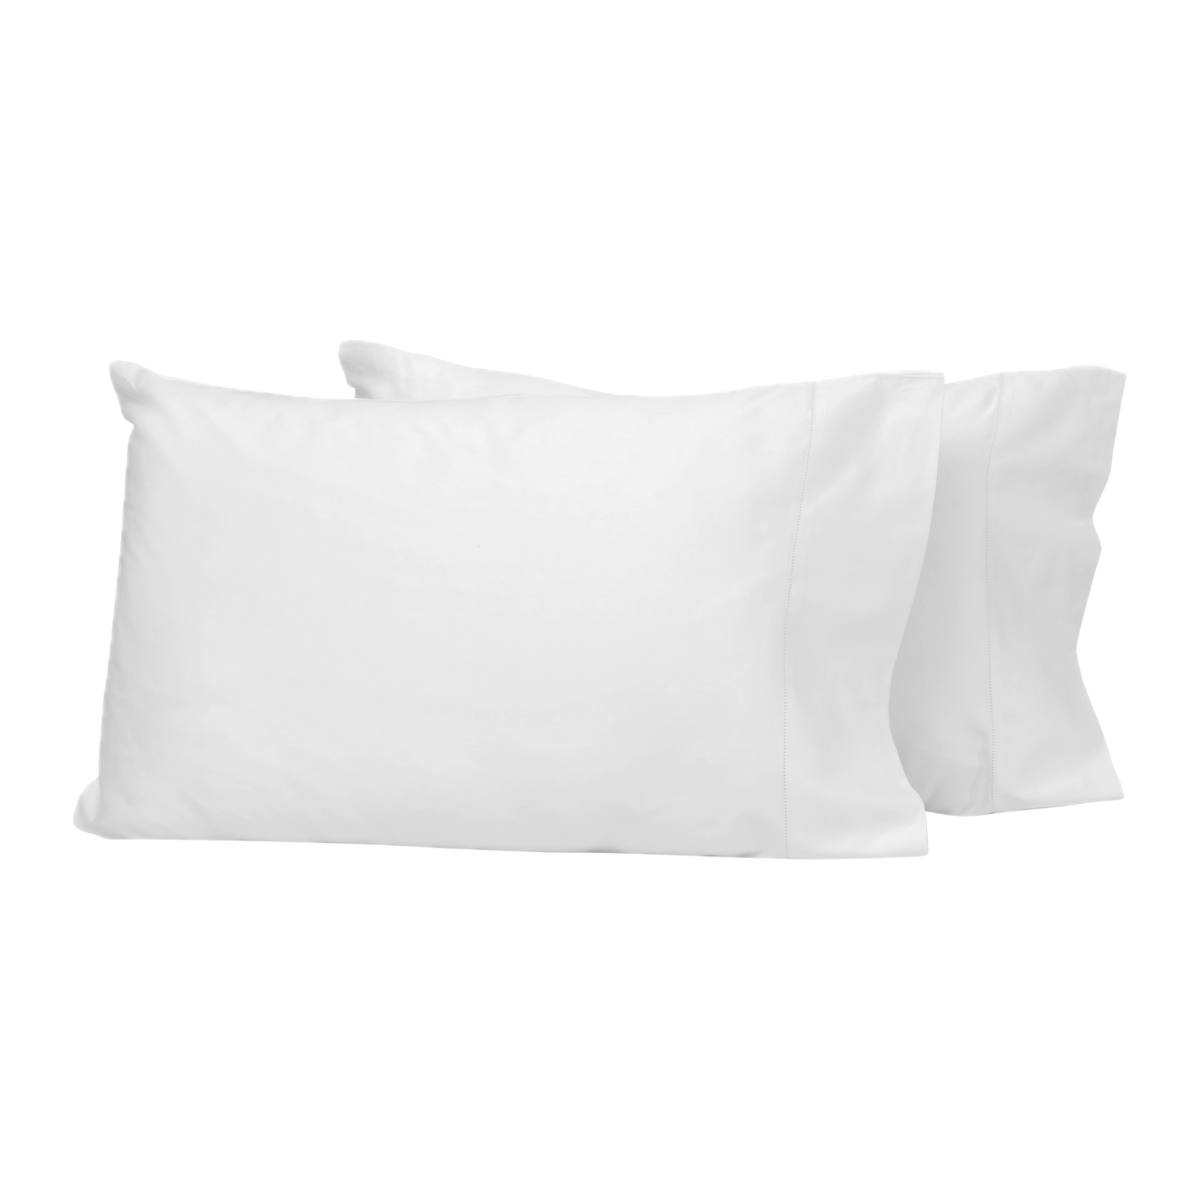 Pair of Pillowcases of White Signoria Nuvola Percale Bedding